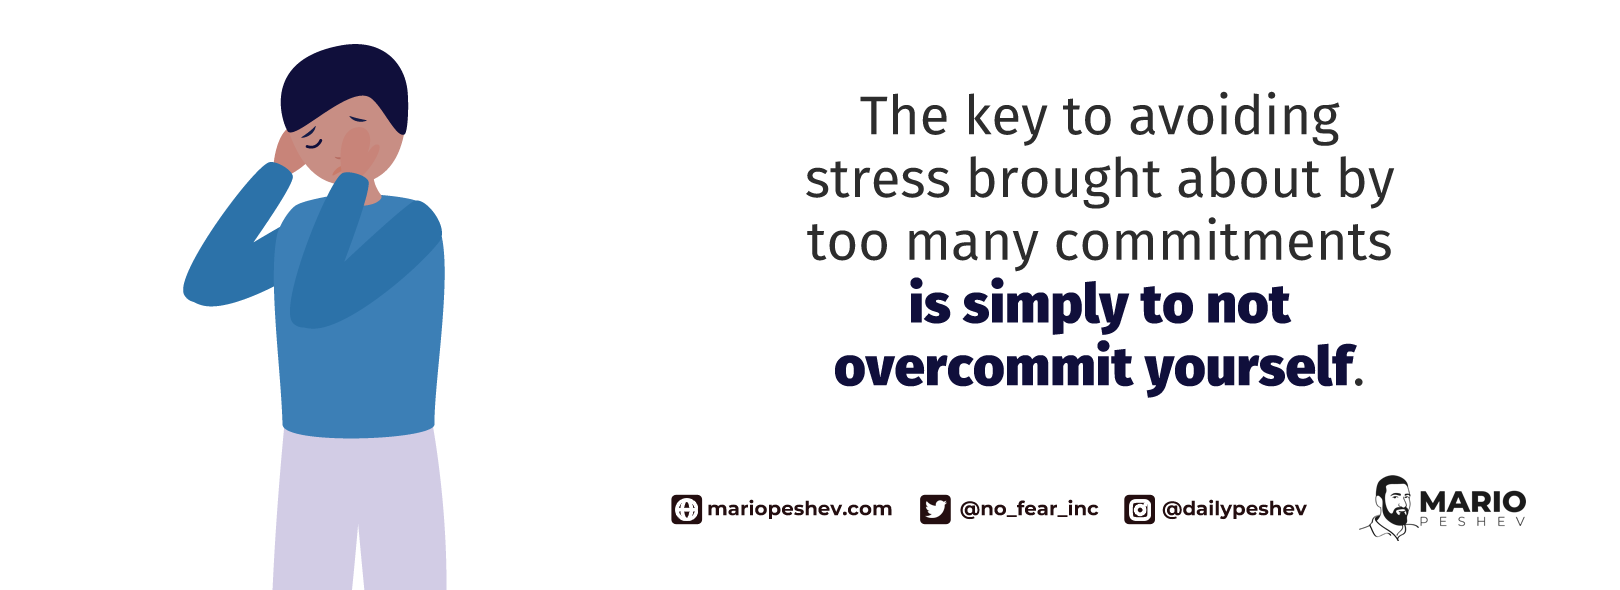 avoiding stress and overcommitting 